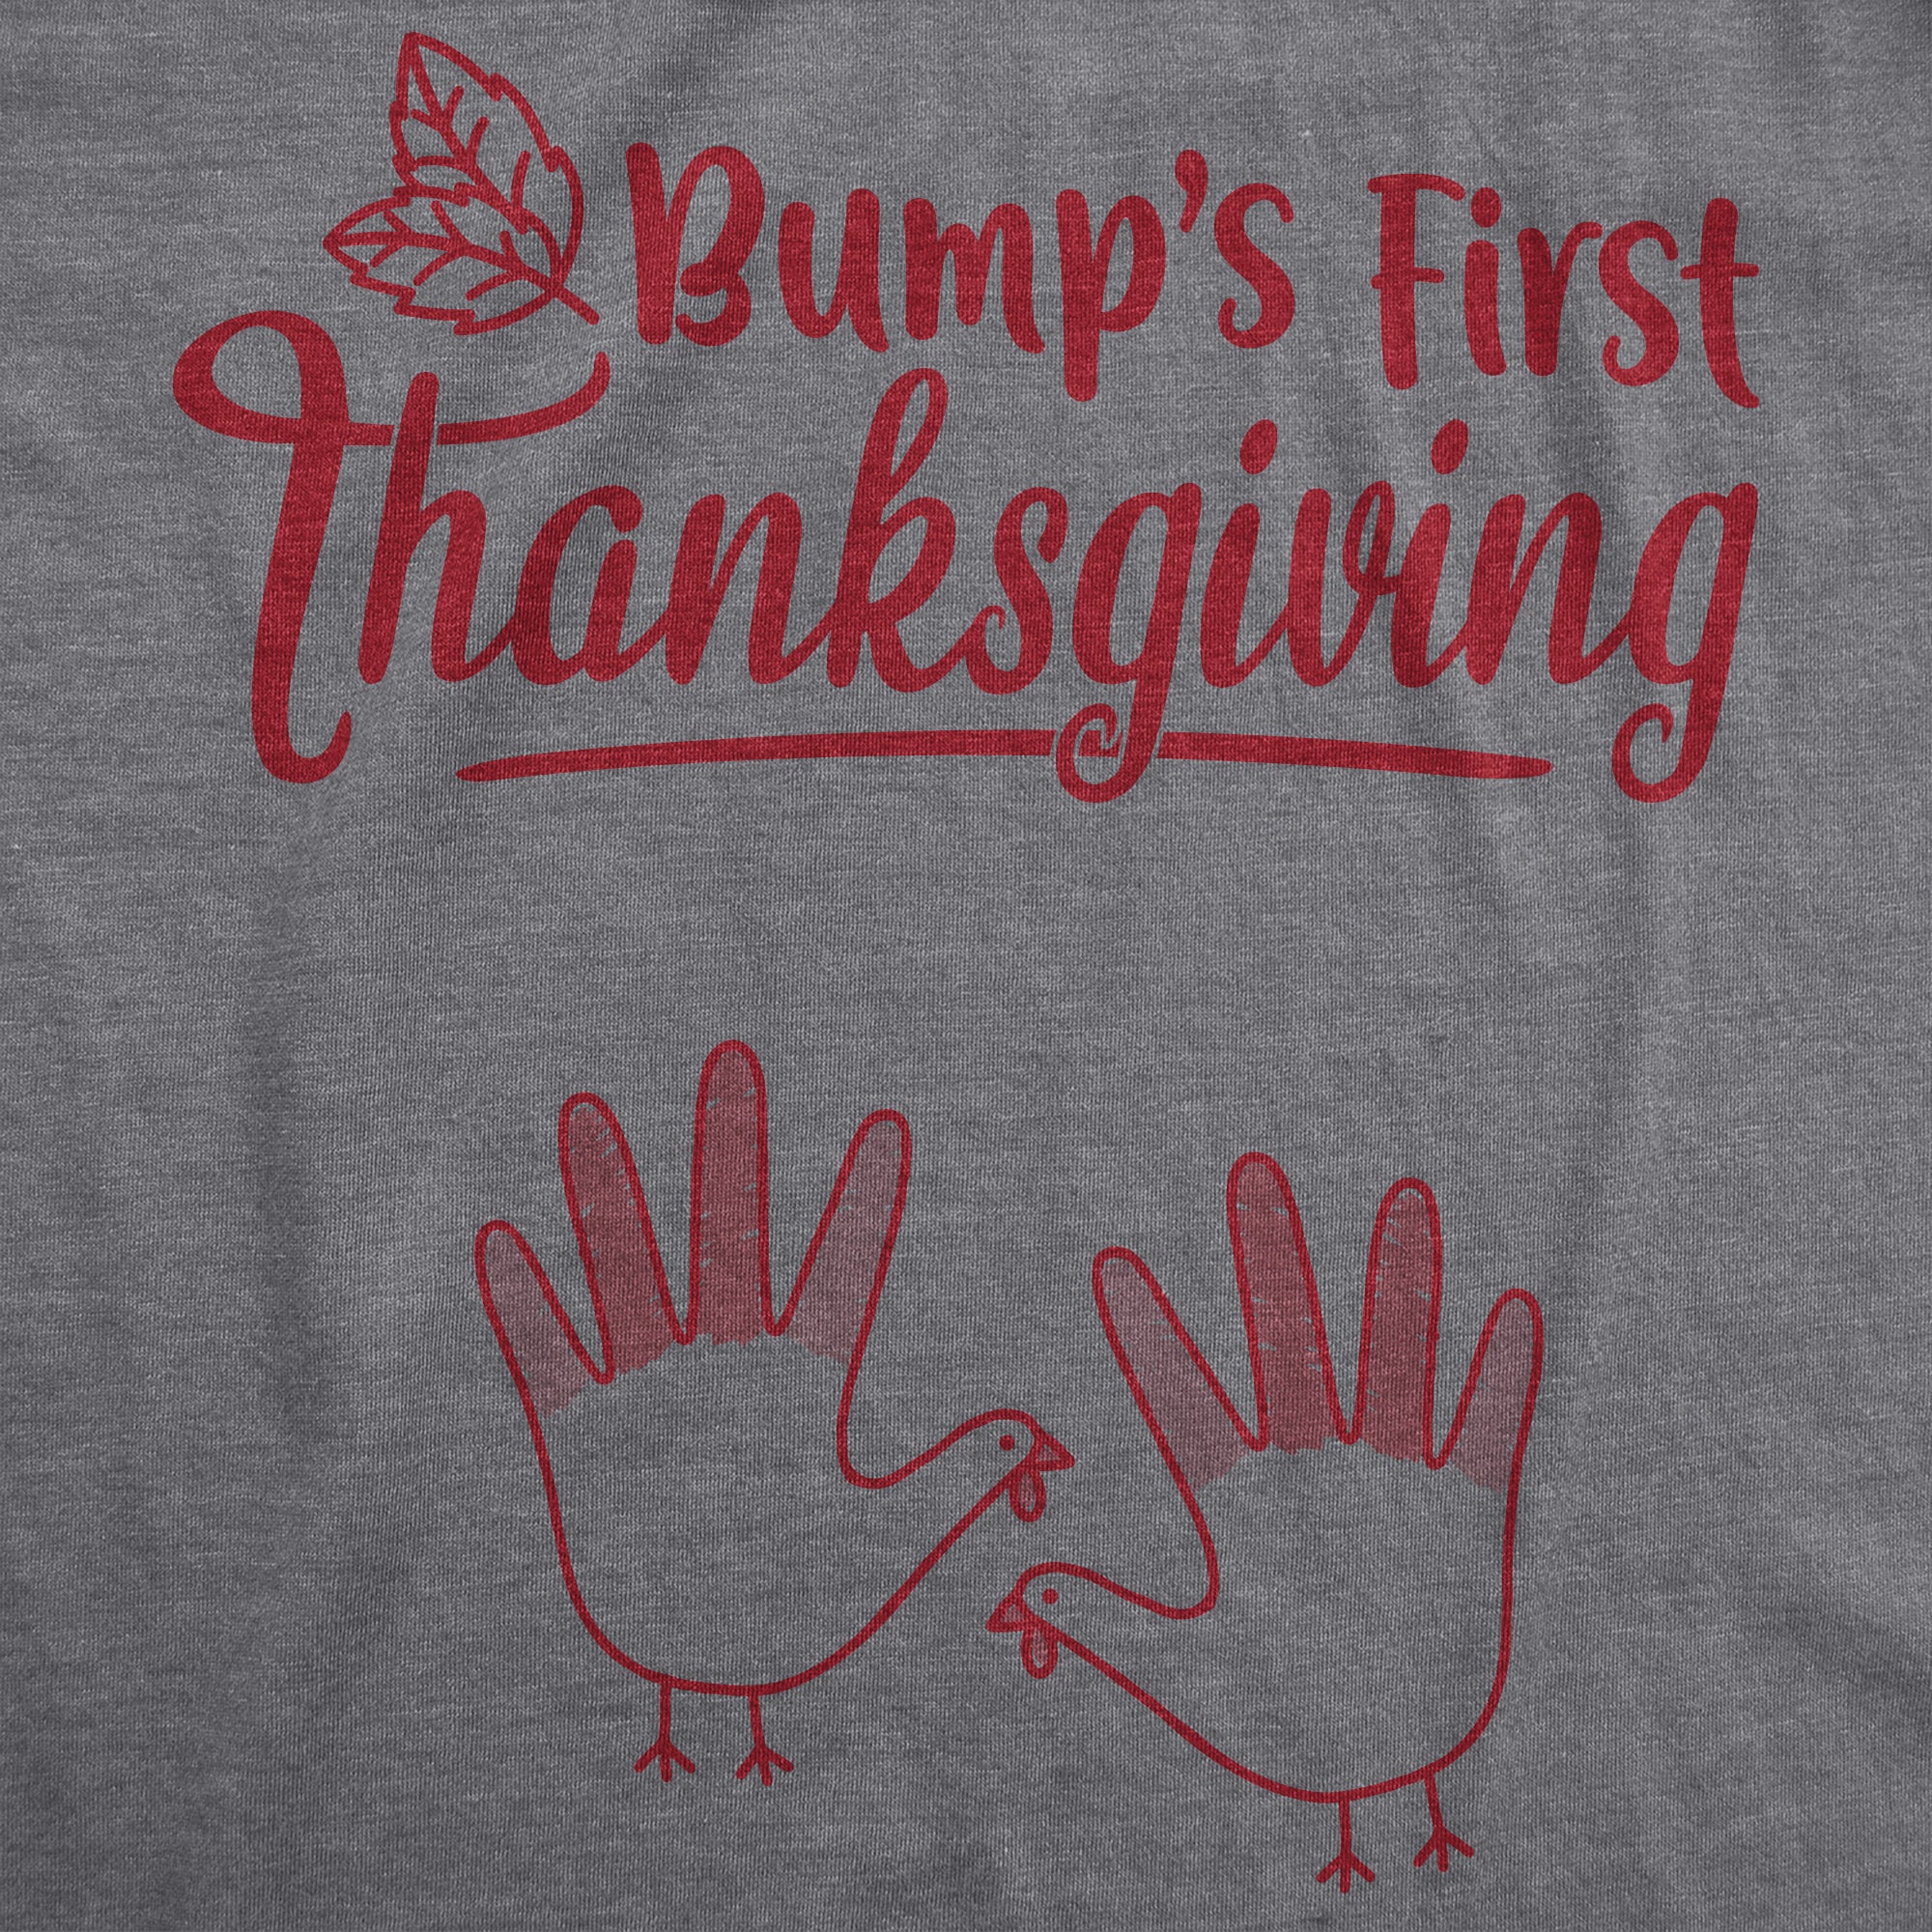 Funny Dark Heather Grey Bump's First Thanksgiving Maternity T Shirt Nerdy Thanksgiving Tee